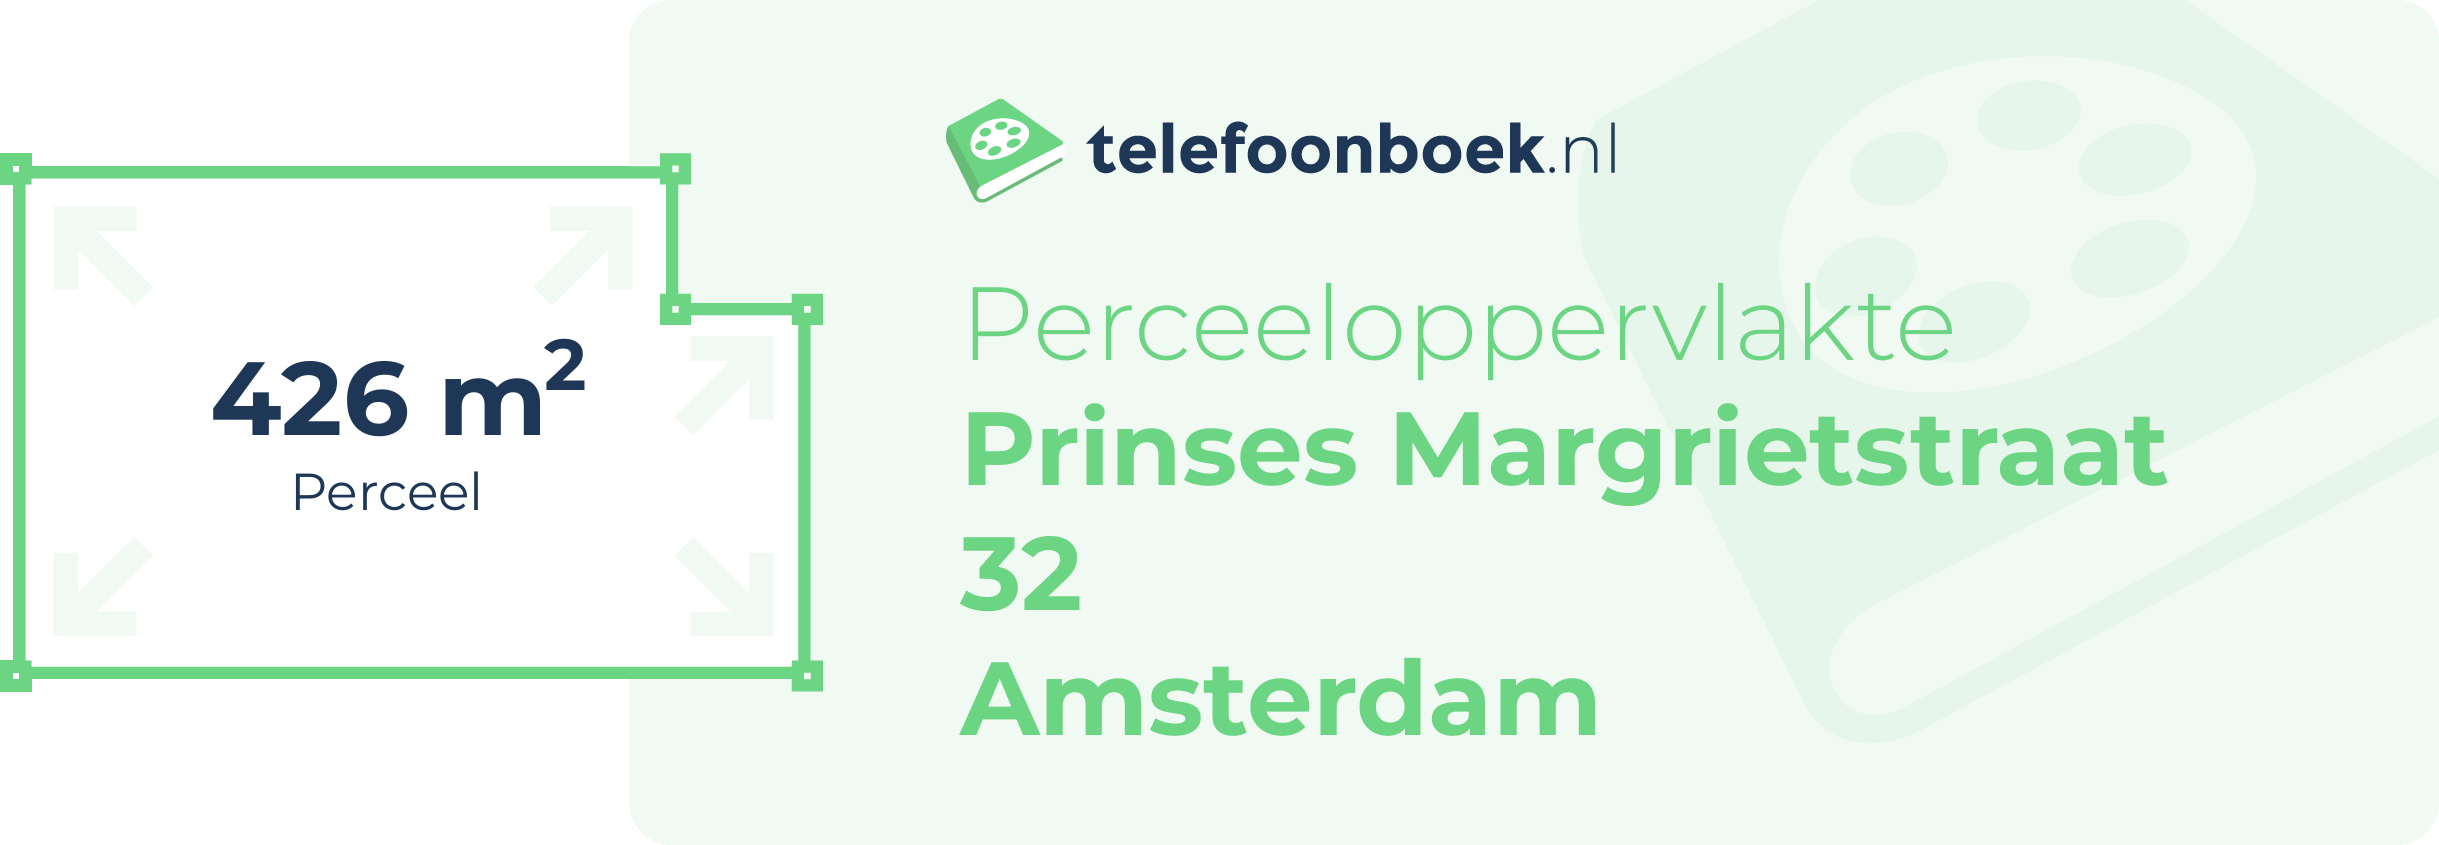 Perceeloppervlakte Prinses Margrietstraat 32 Amsterdam